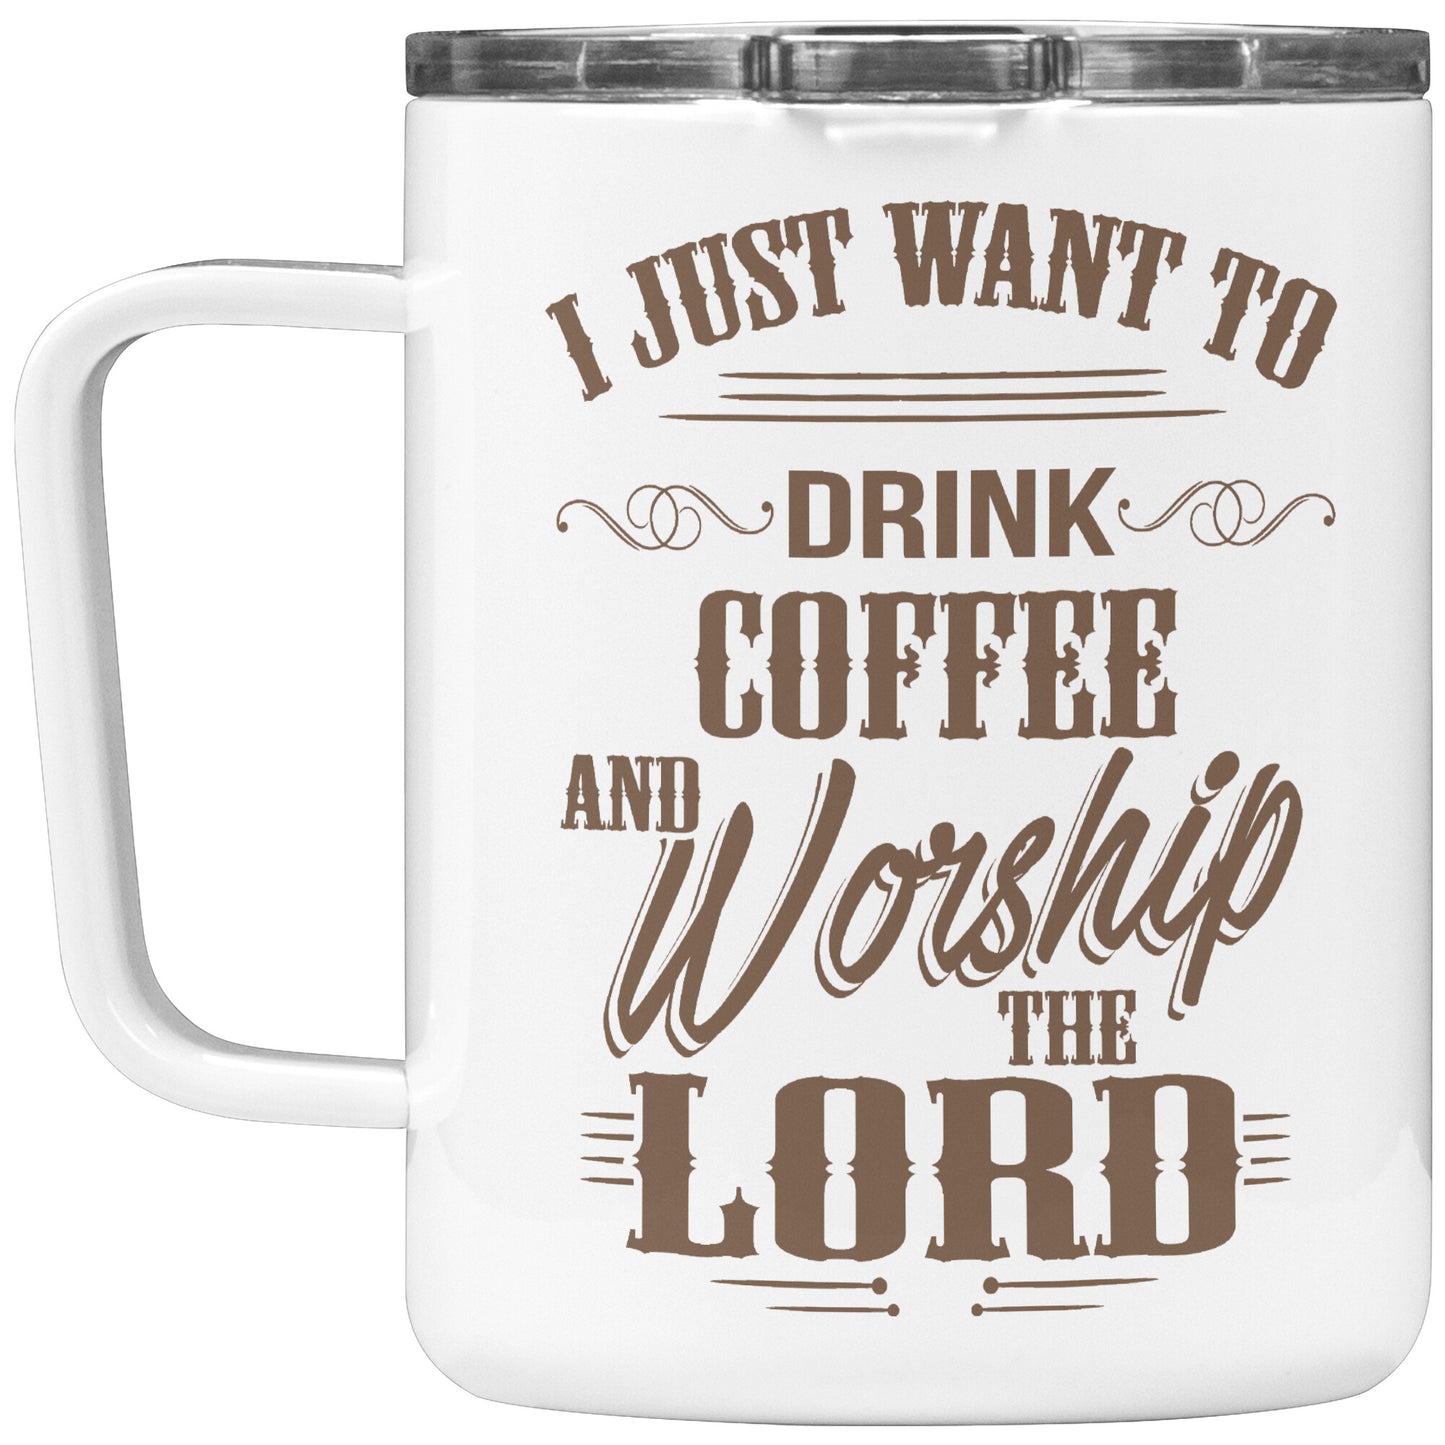 JUST COFFEE AND WORSHIP 10oz Insulated Coffee Mug